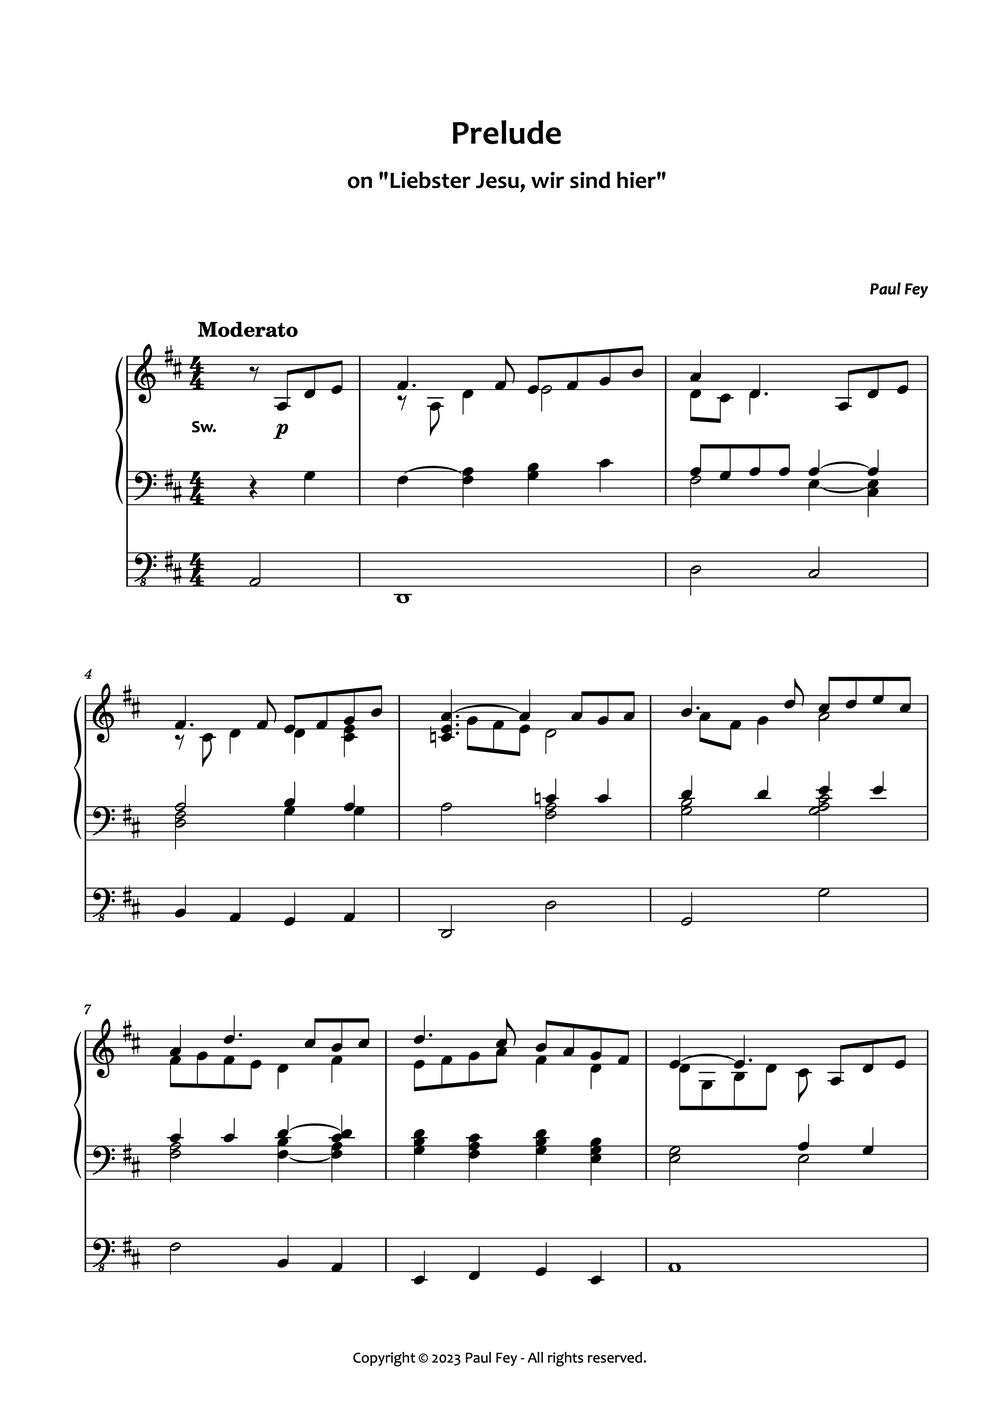 Prelude on "Liebster Jesu" (Sheet Music) - Music for Organ Paul Fey Organist 